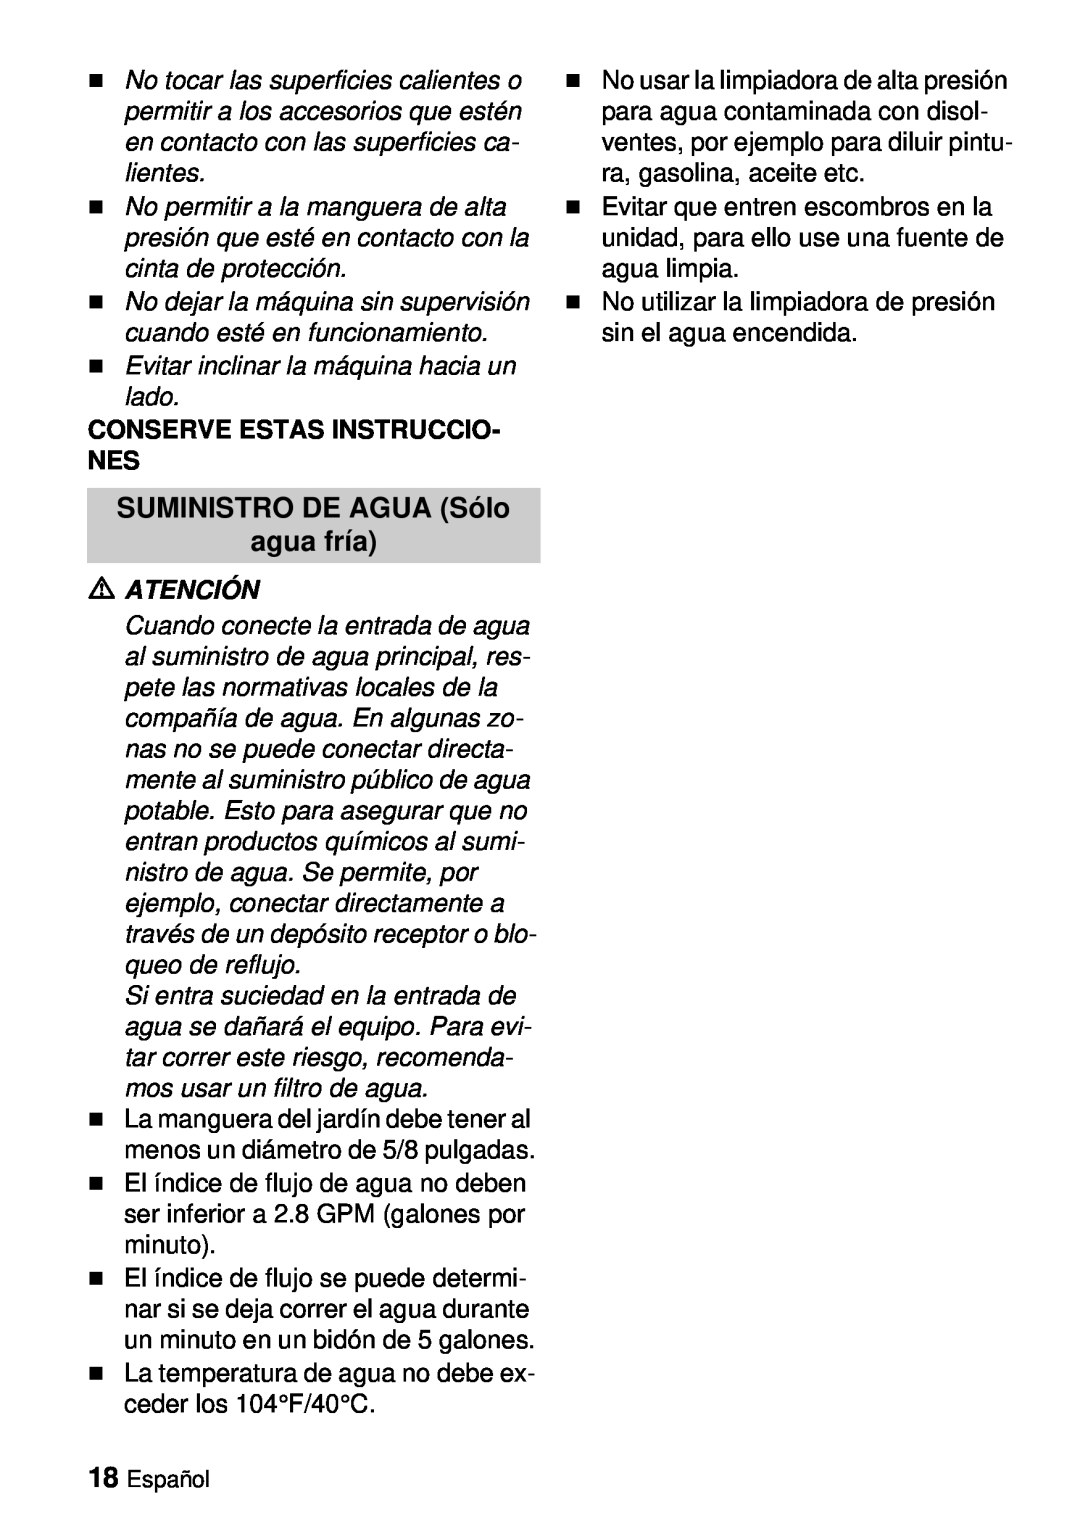 Karcher G 2000 ET manual SUMINISTRO DE AGUA Sólo agua fría, Conserve Estas Instruccio- Nes, Atención 